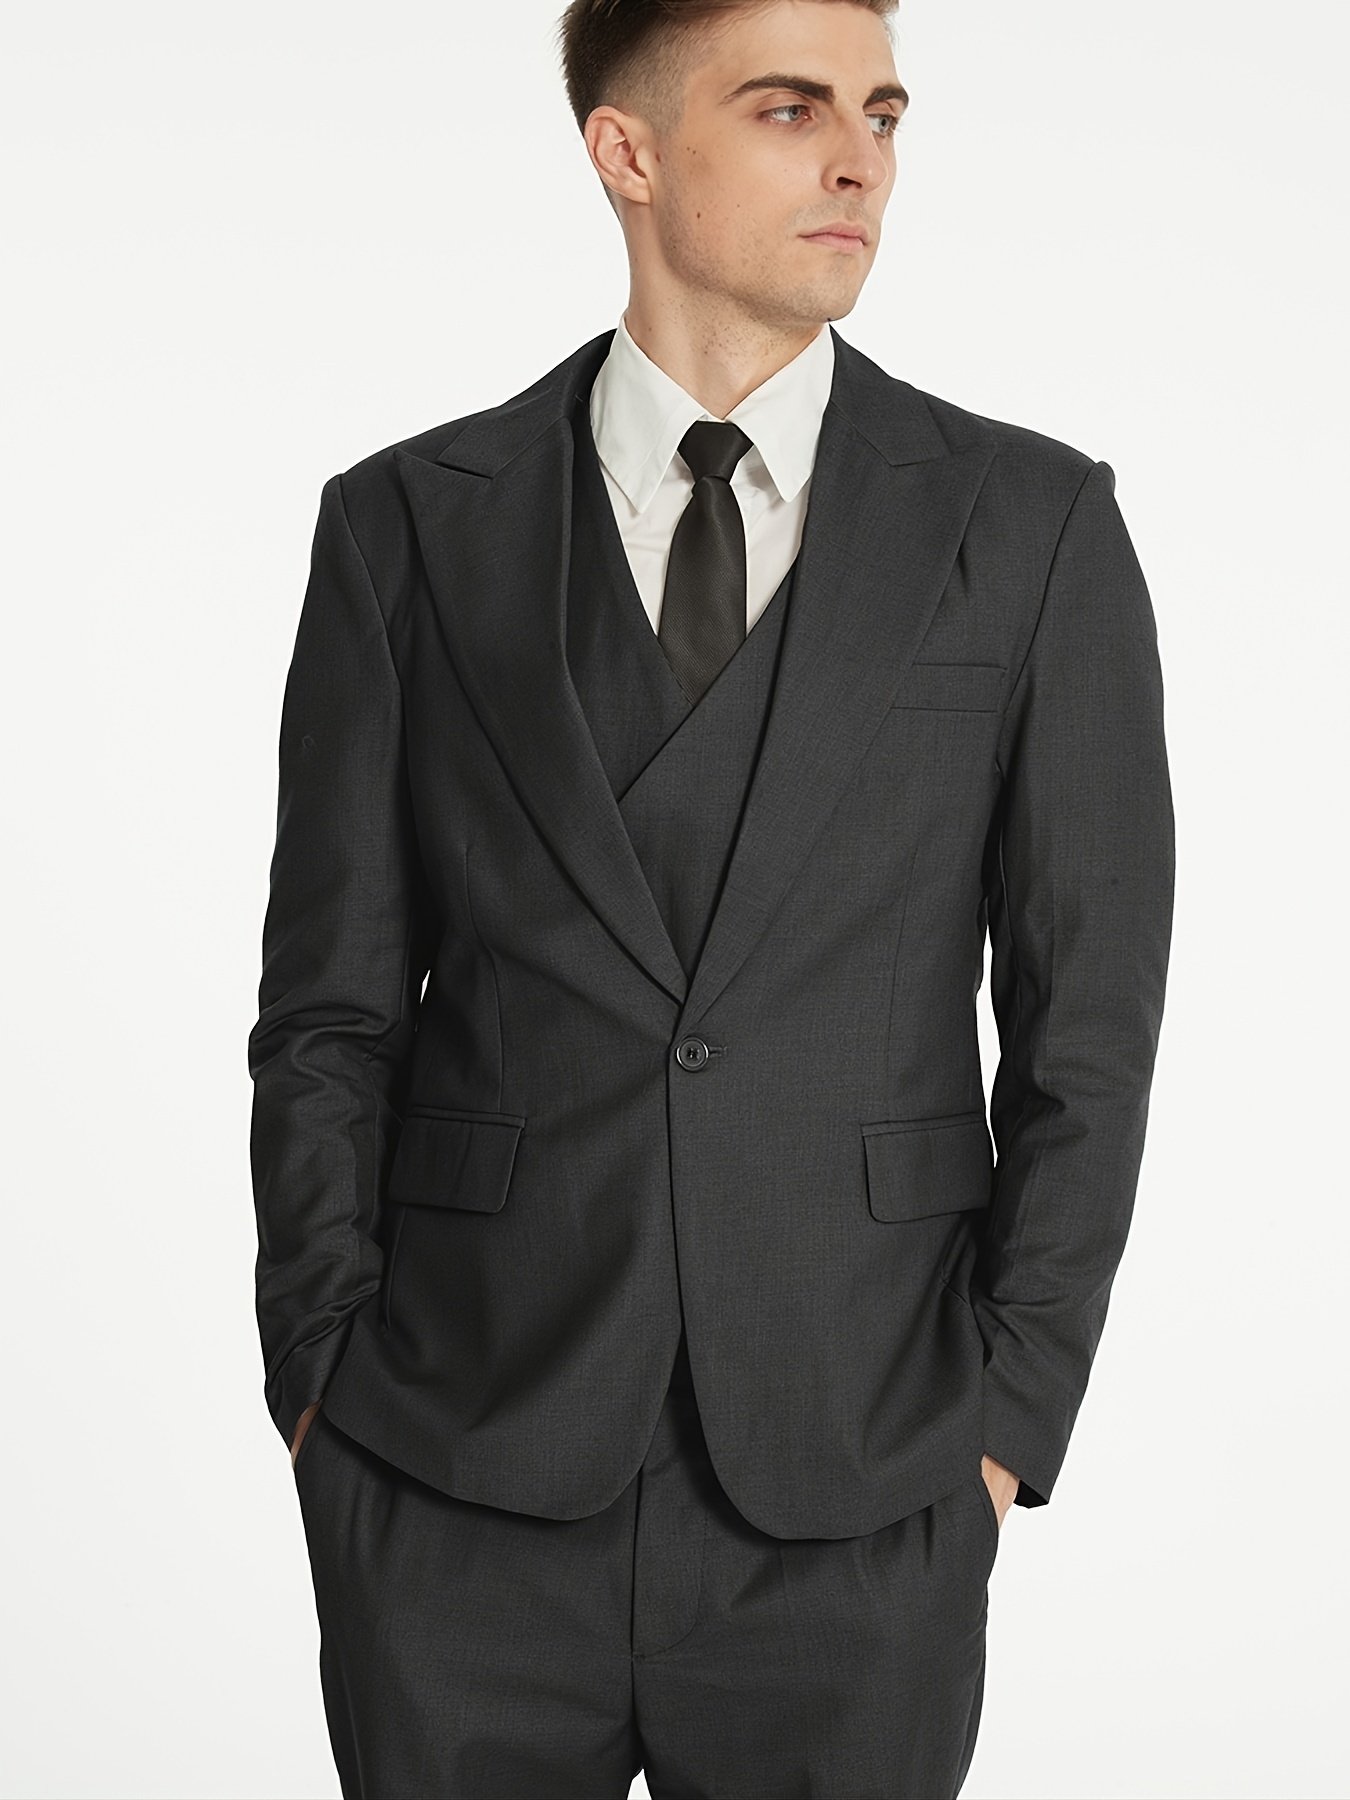 Men's Slim-Fit Suits − Shop 30 Items, 12 Brands & up to −80